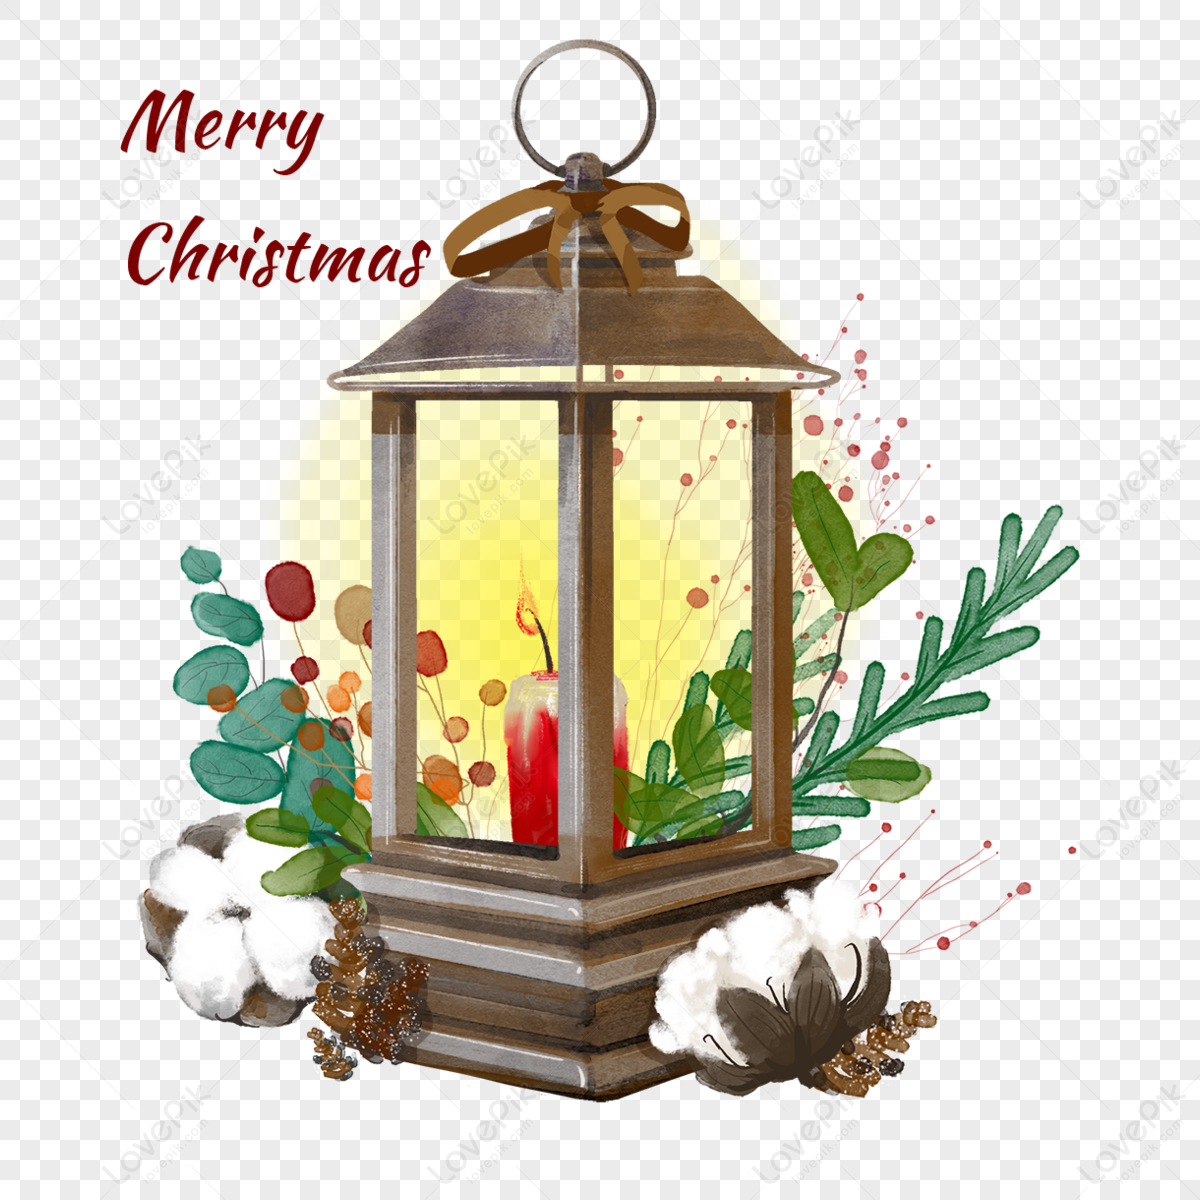 Christmas season passing blessing Christmas lights,happy holidays,seasoning png image